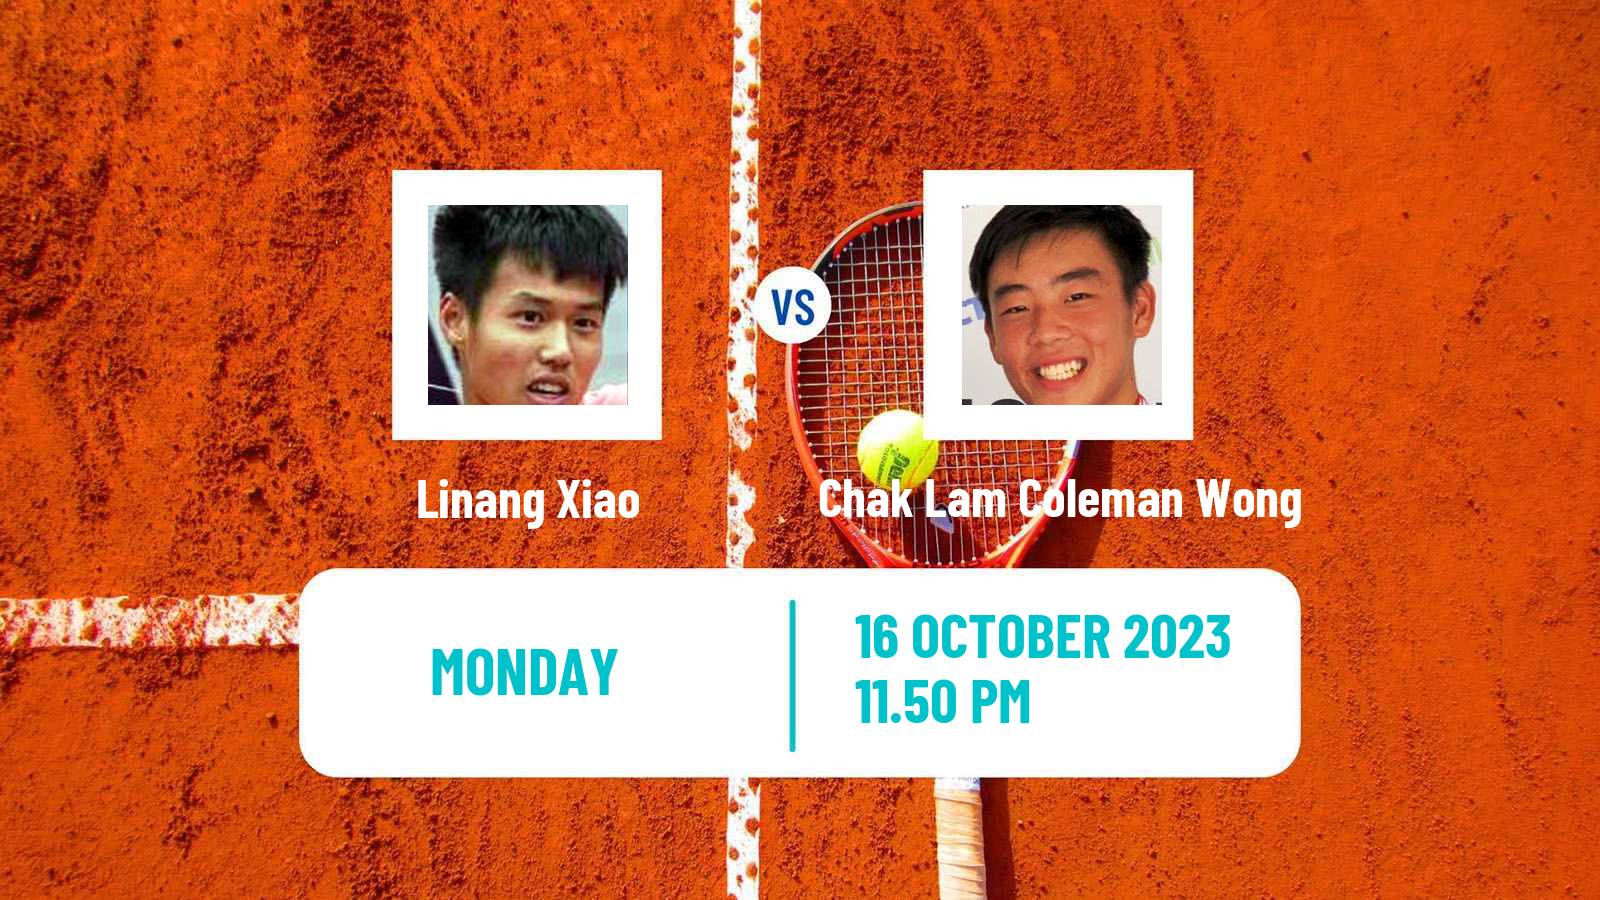 Tennis Shenzhen 3 Challenger Men Linang Xiao - Chak Lam Coleman Wong